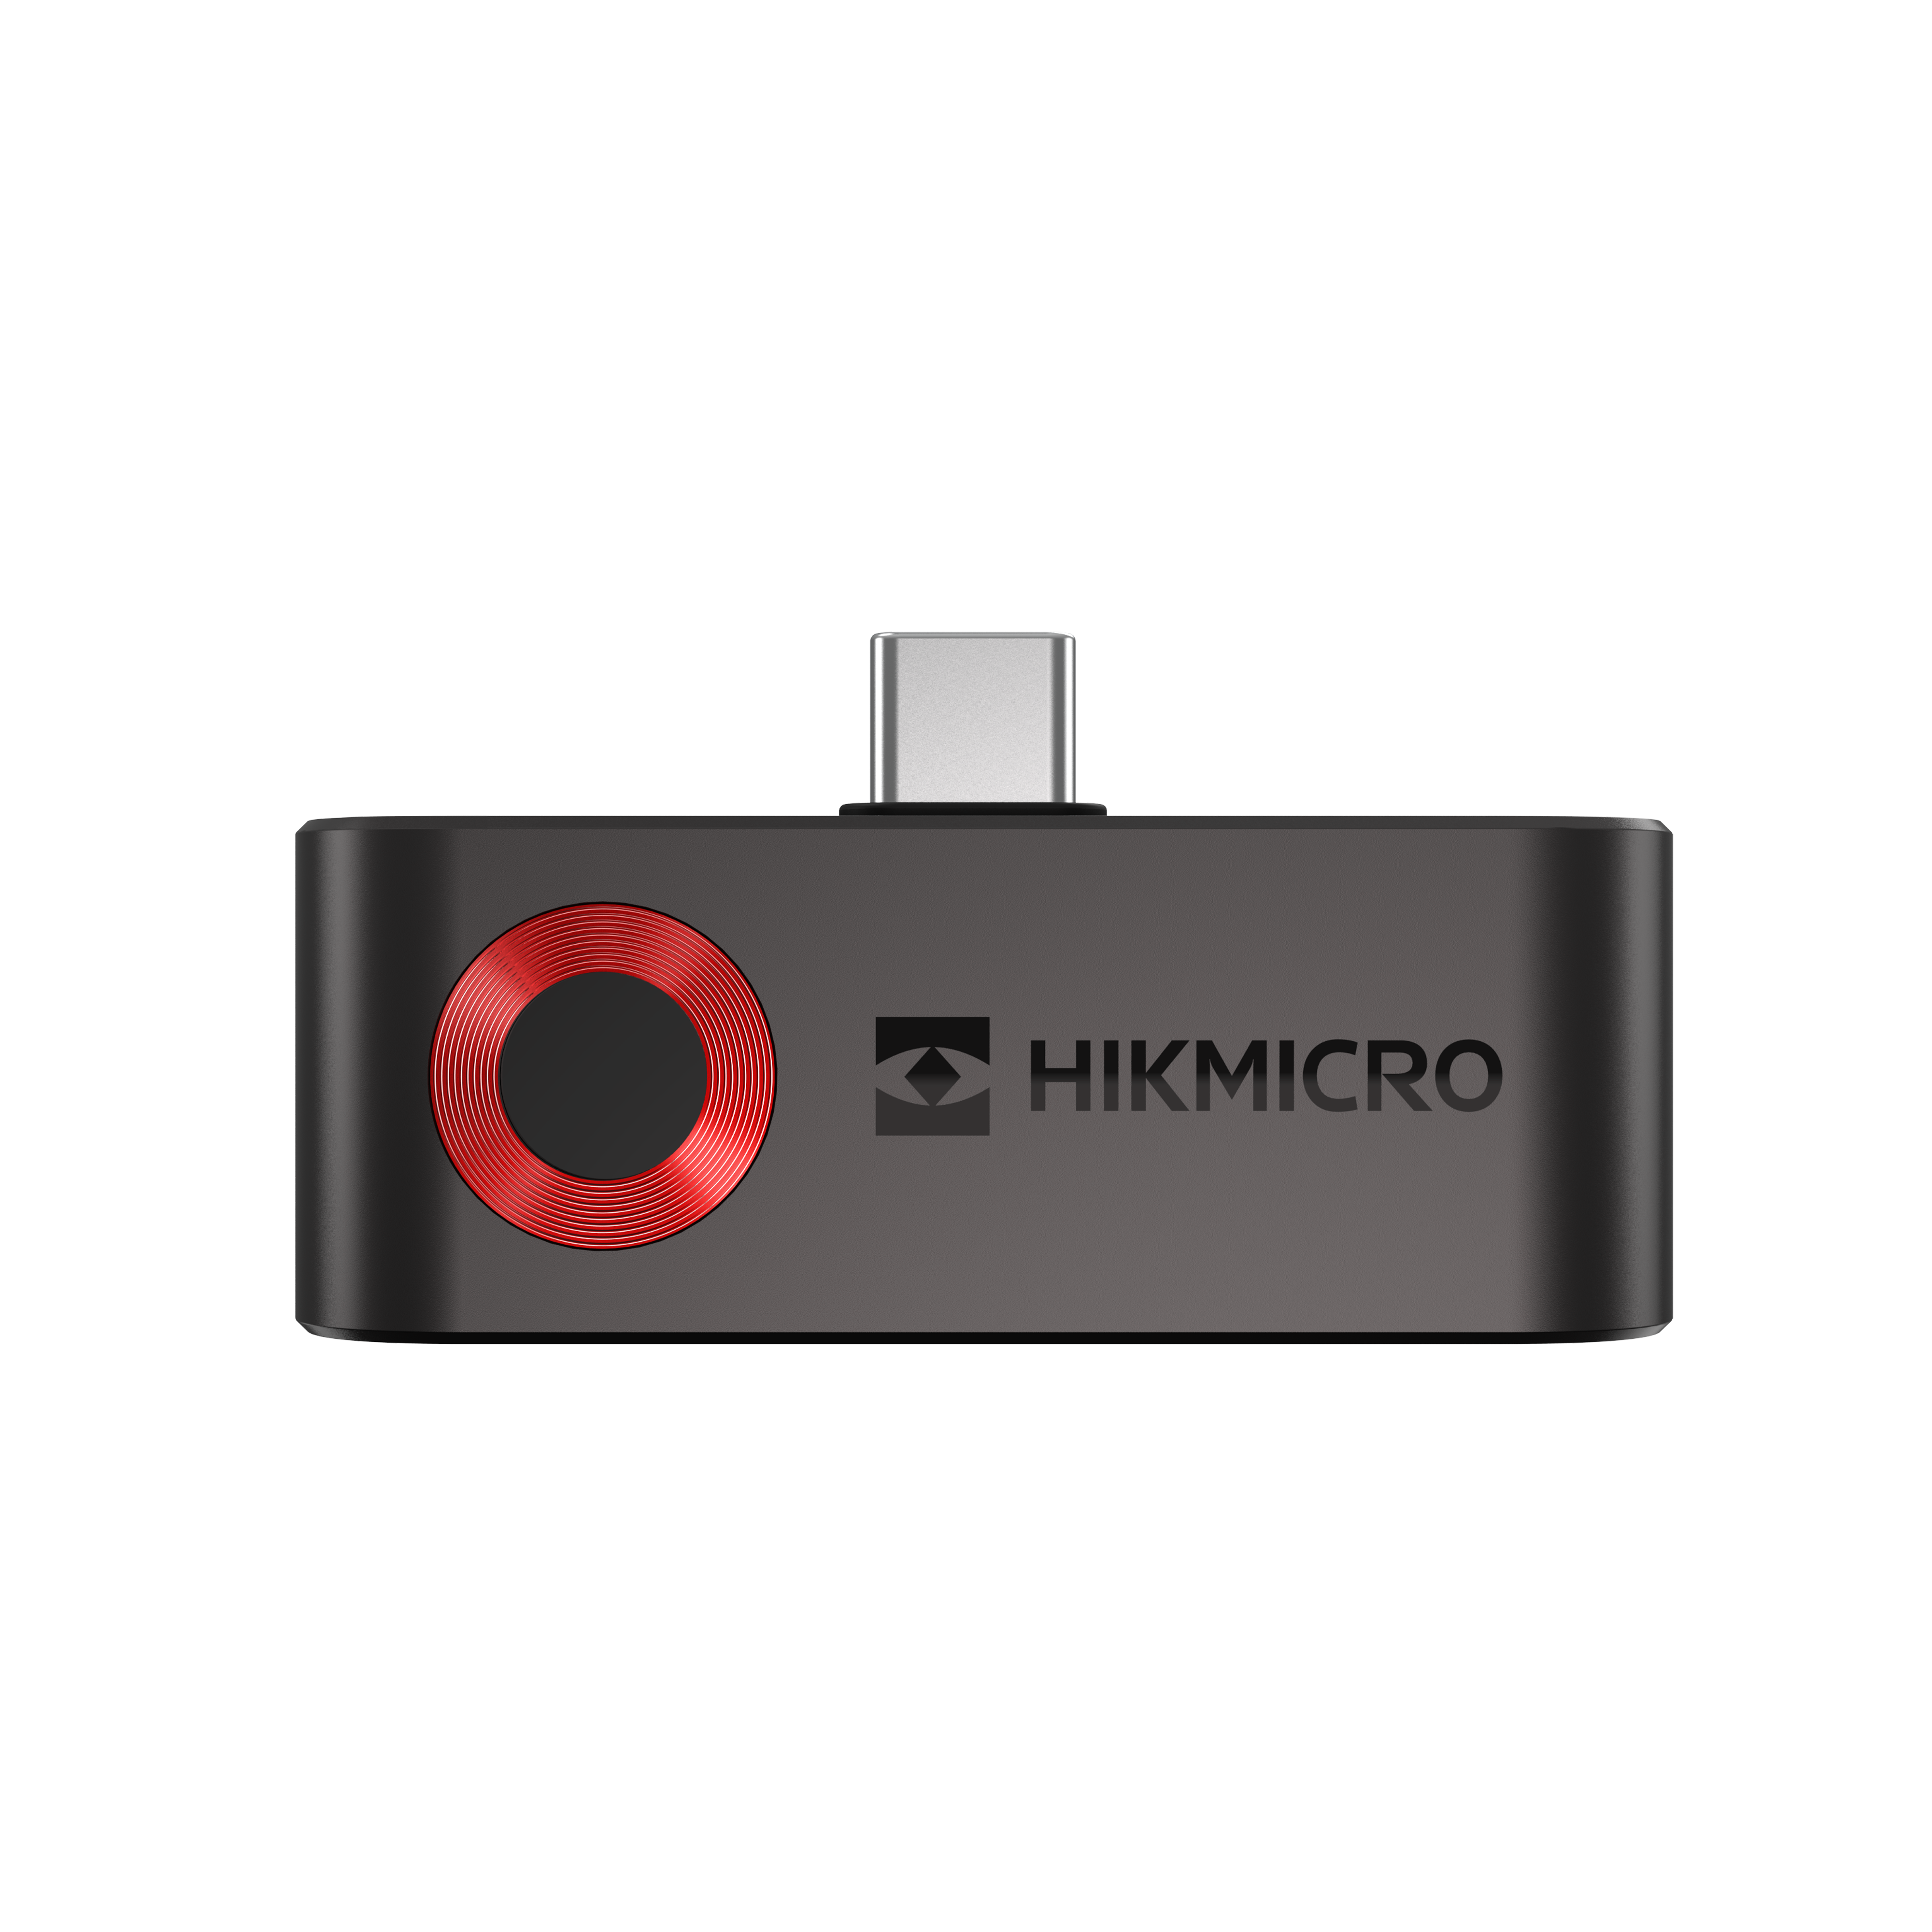 HIKMICRO Mini1 Smartphone Modul - Wärmebildauflösung: 160x120 Pixel